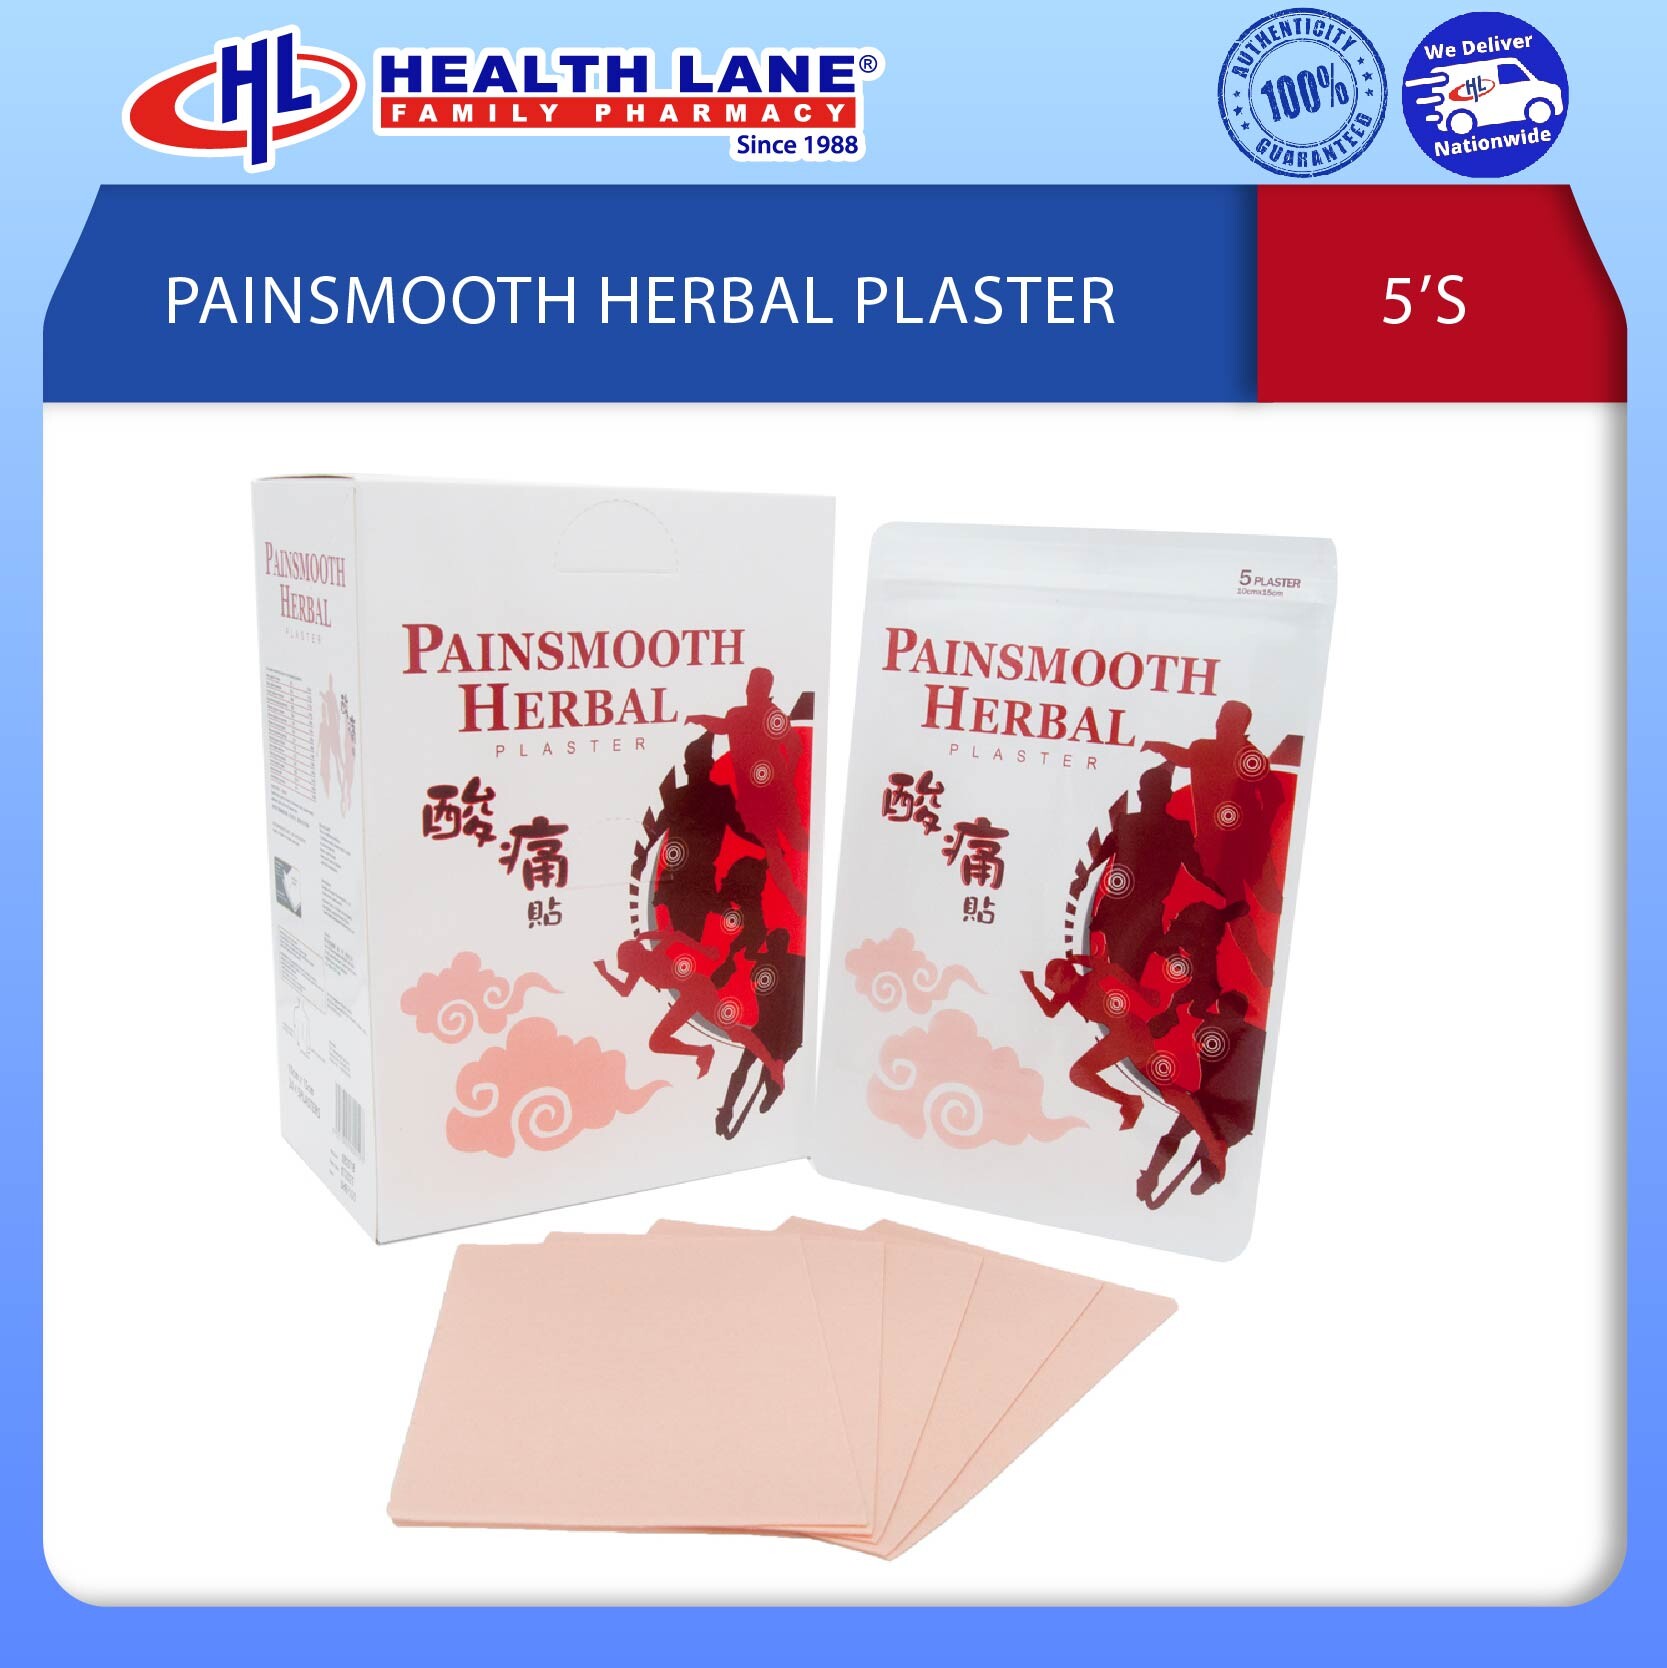 PAINSMOOTH HERBAL PLASTER 5'S